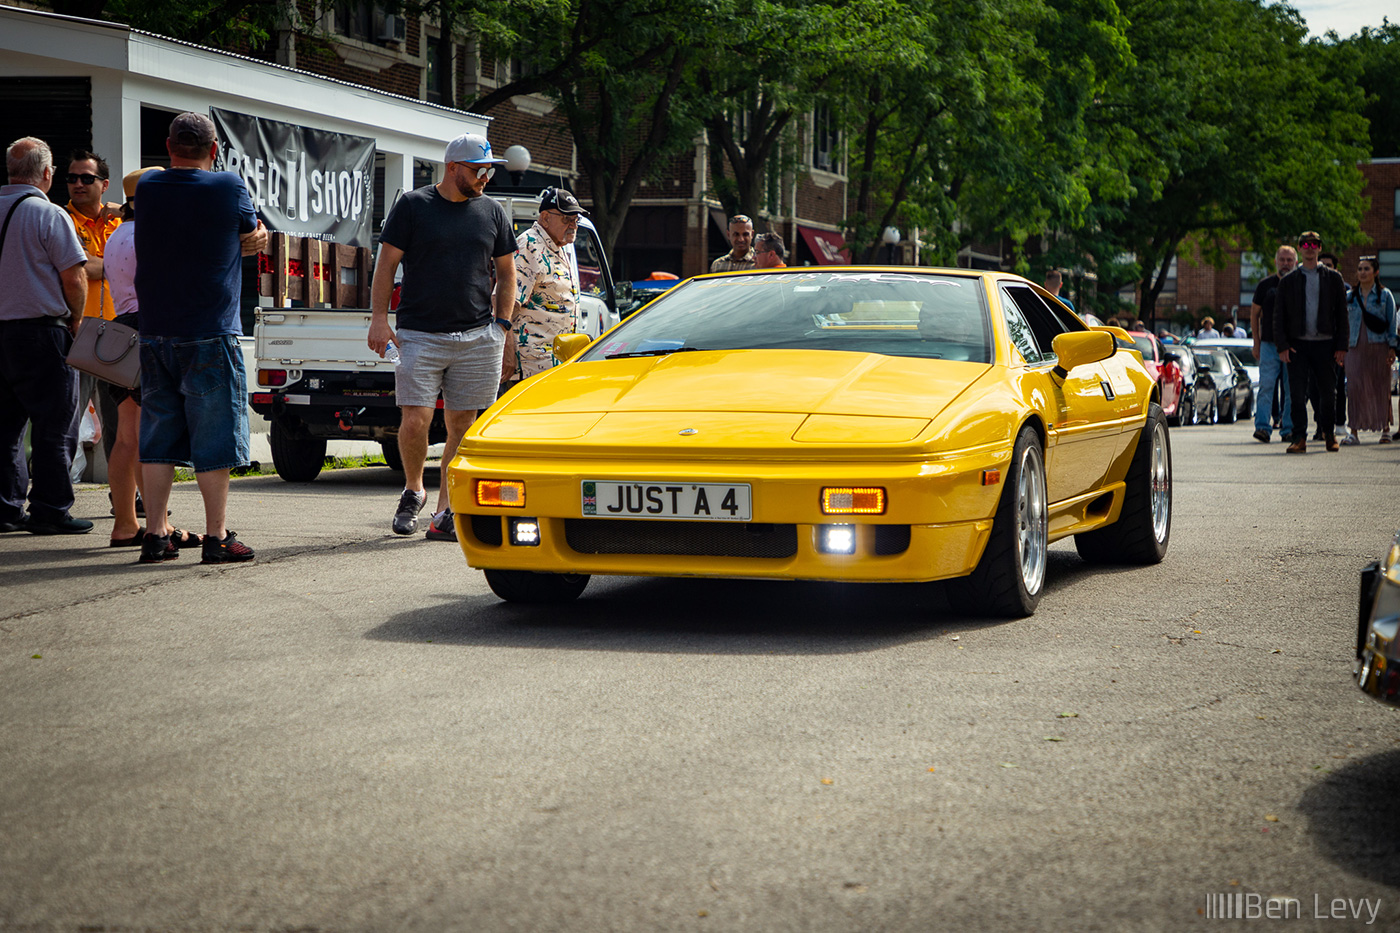 Just A 4, Yellow Lotus Esprit